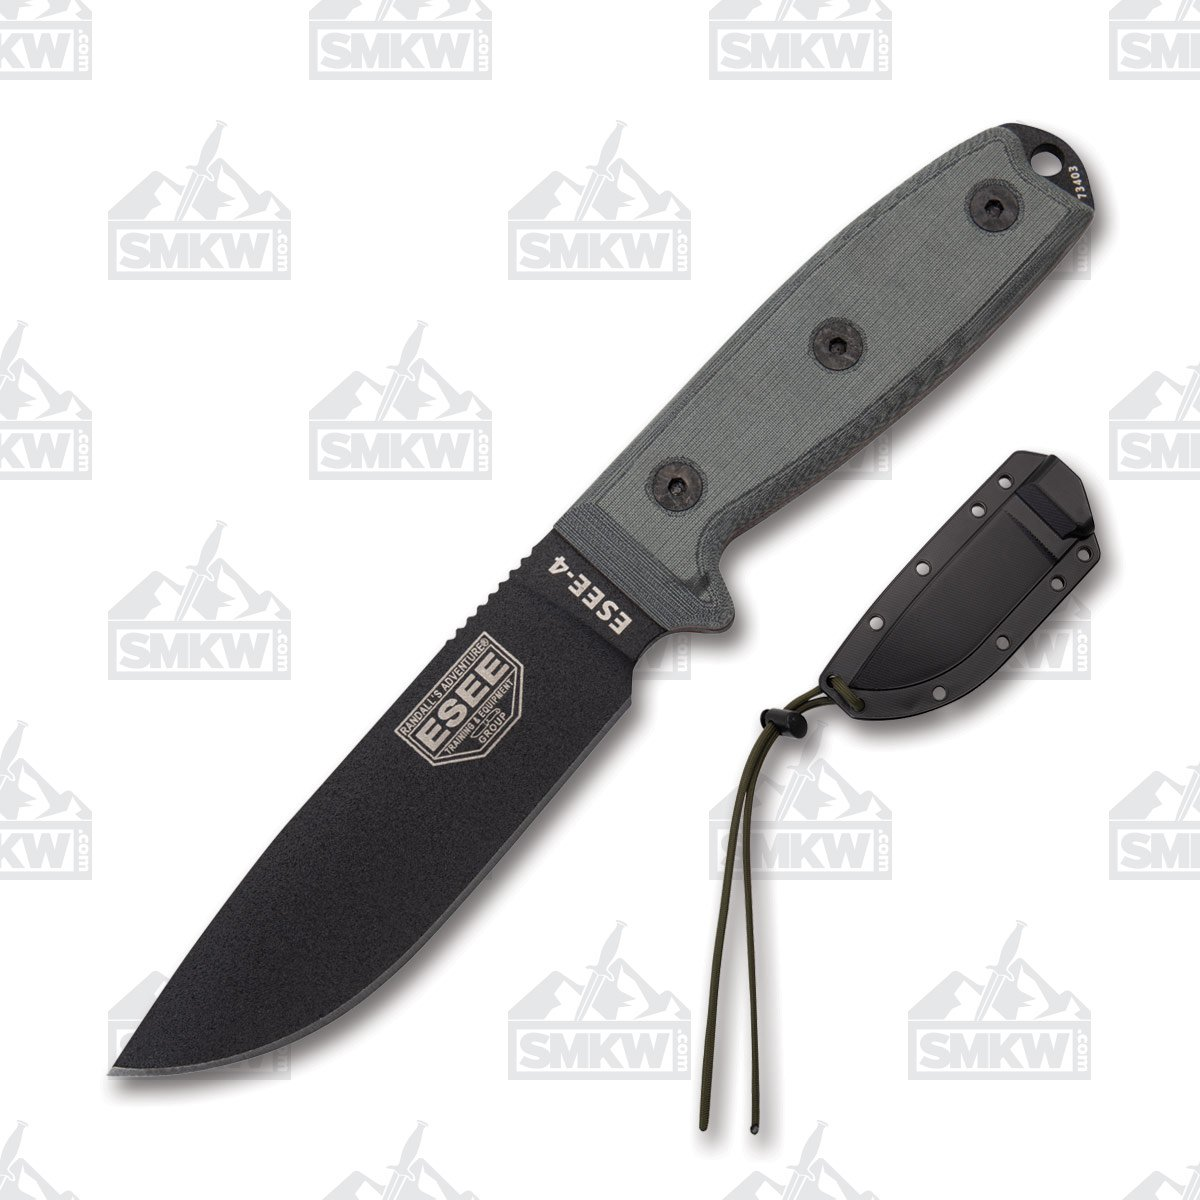  ESEE 4P-MB Fixed Blade Knife w/Handles, Molded Sheath